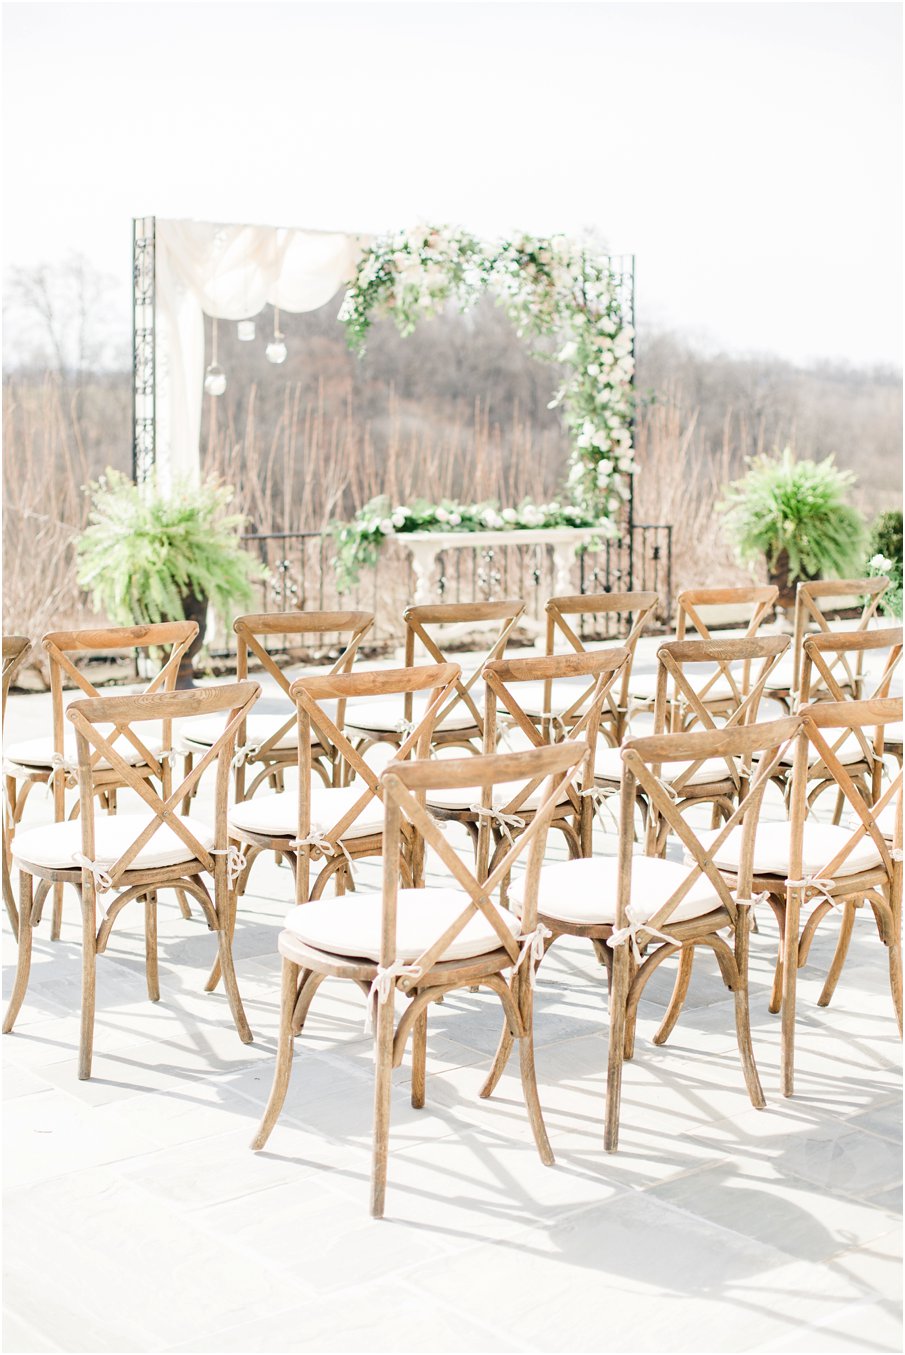 outdoor-wedding-ceremony-romantic-arbor-wooden-cross-back-chairs.jpg